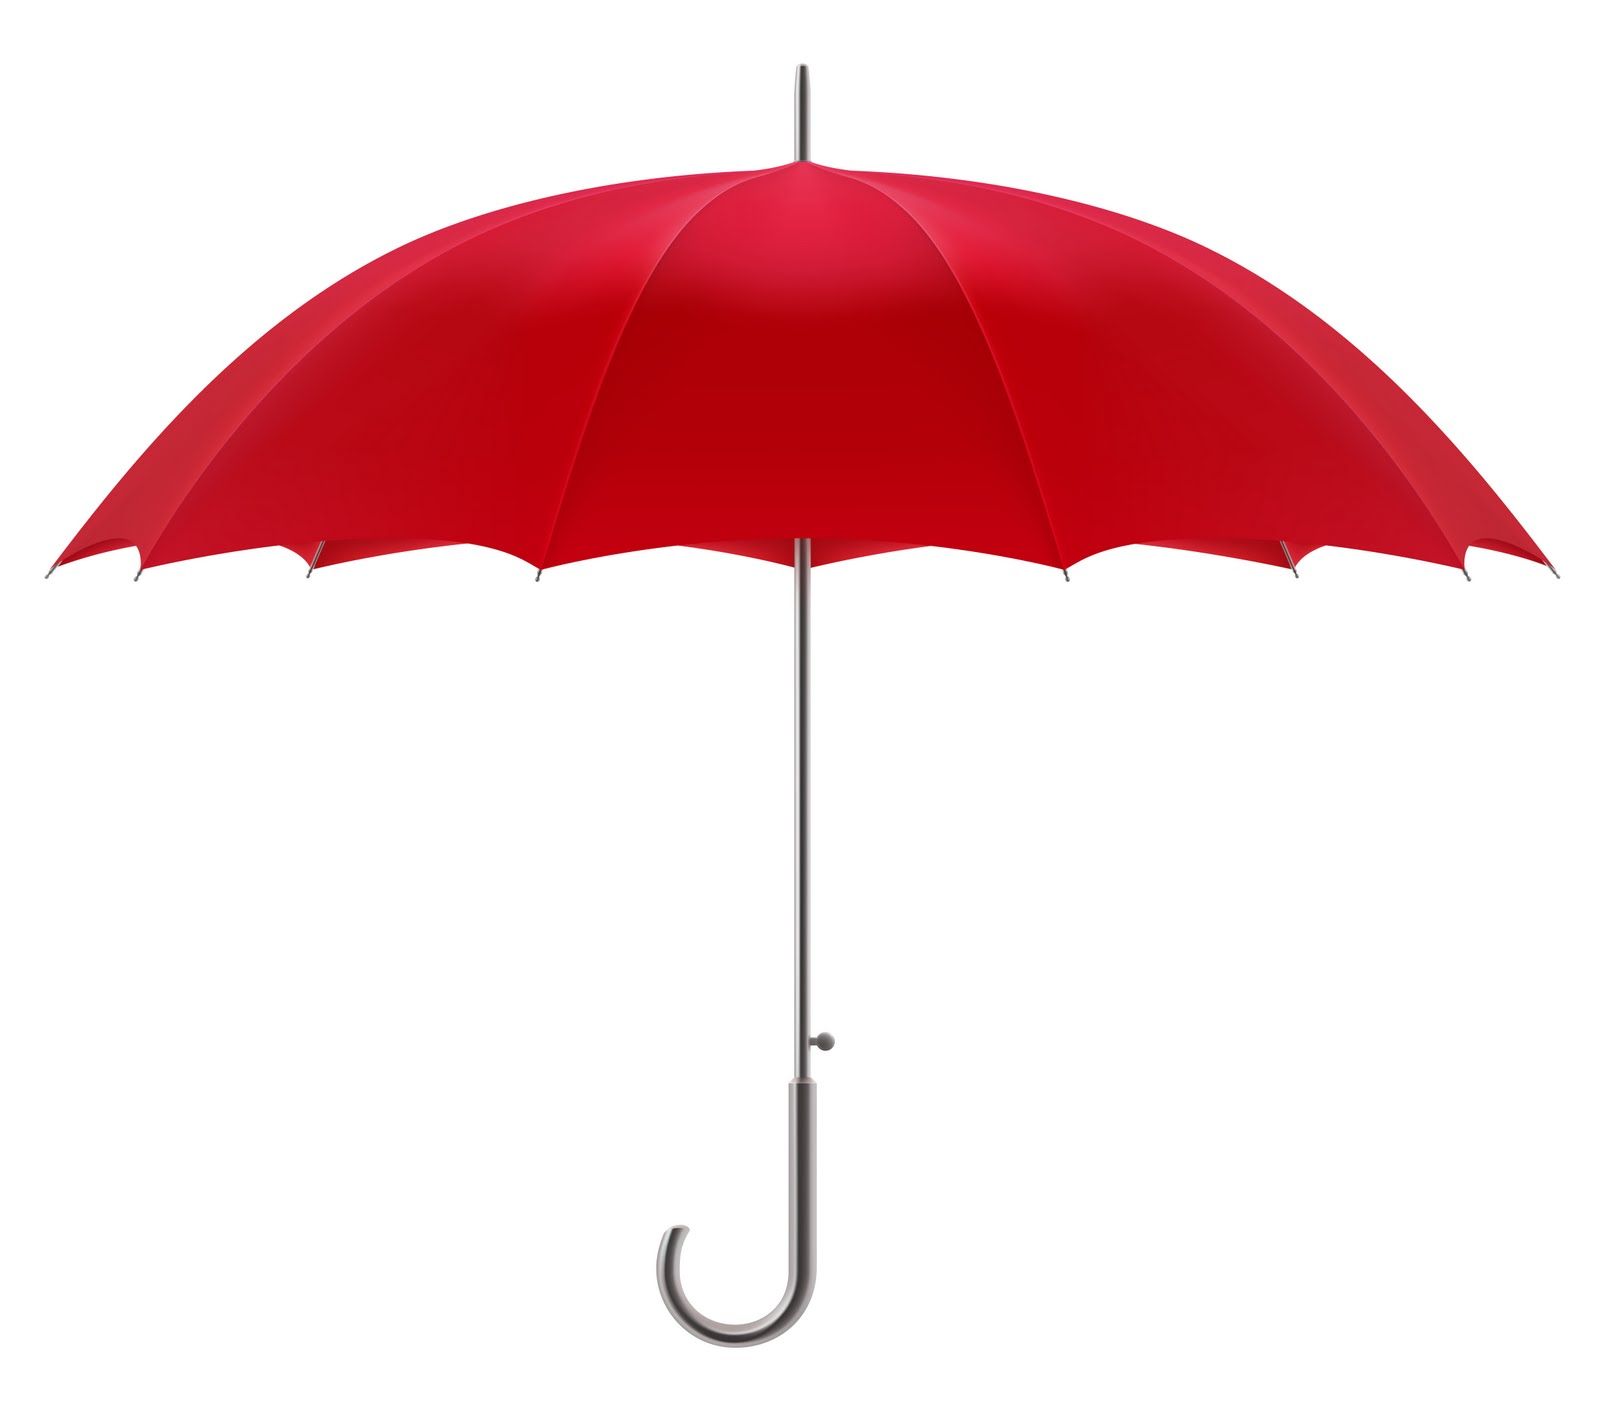 Red umbrella | Association for Progressive Communications ...